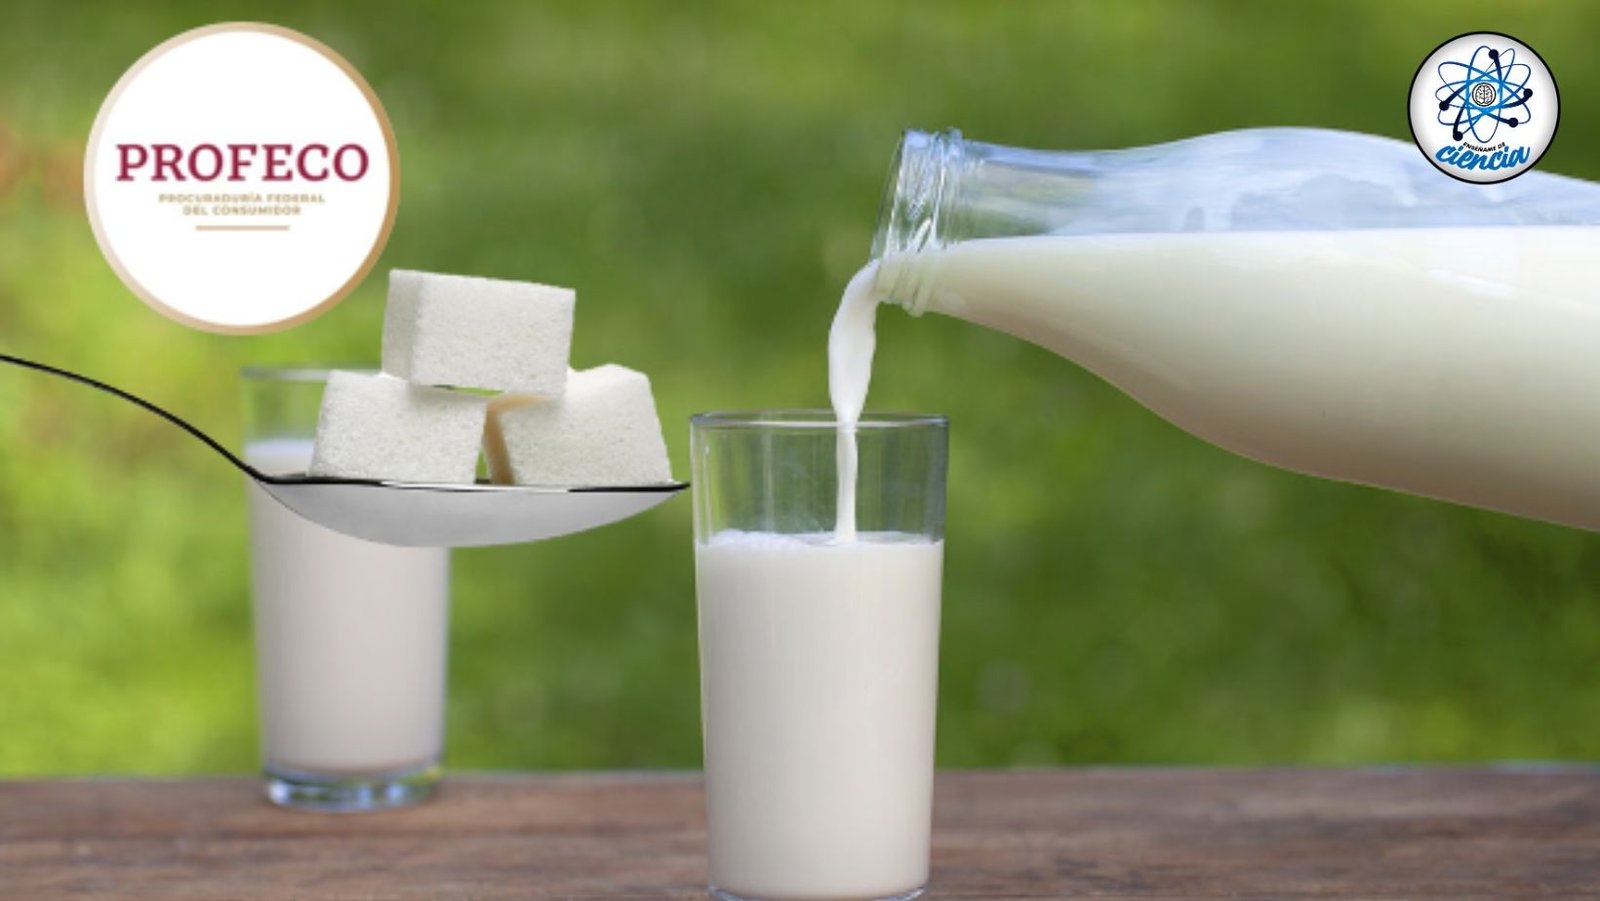 ¡Atención! Estas marcas de leche contienen exceso de azúcar